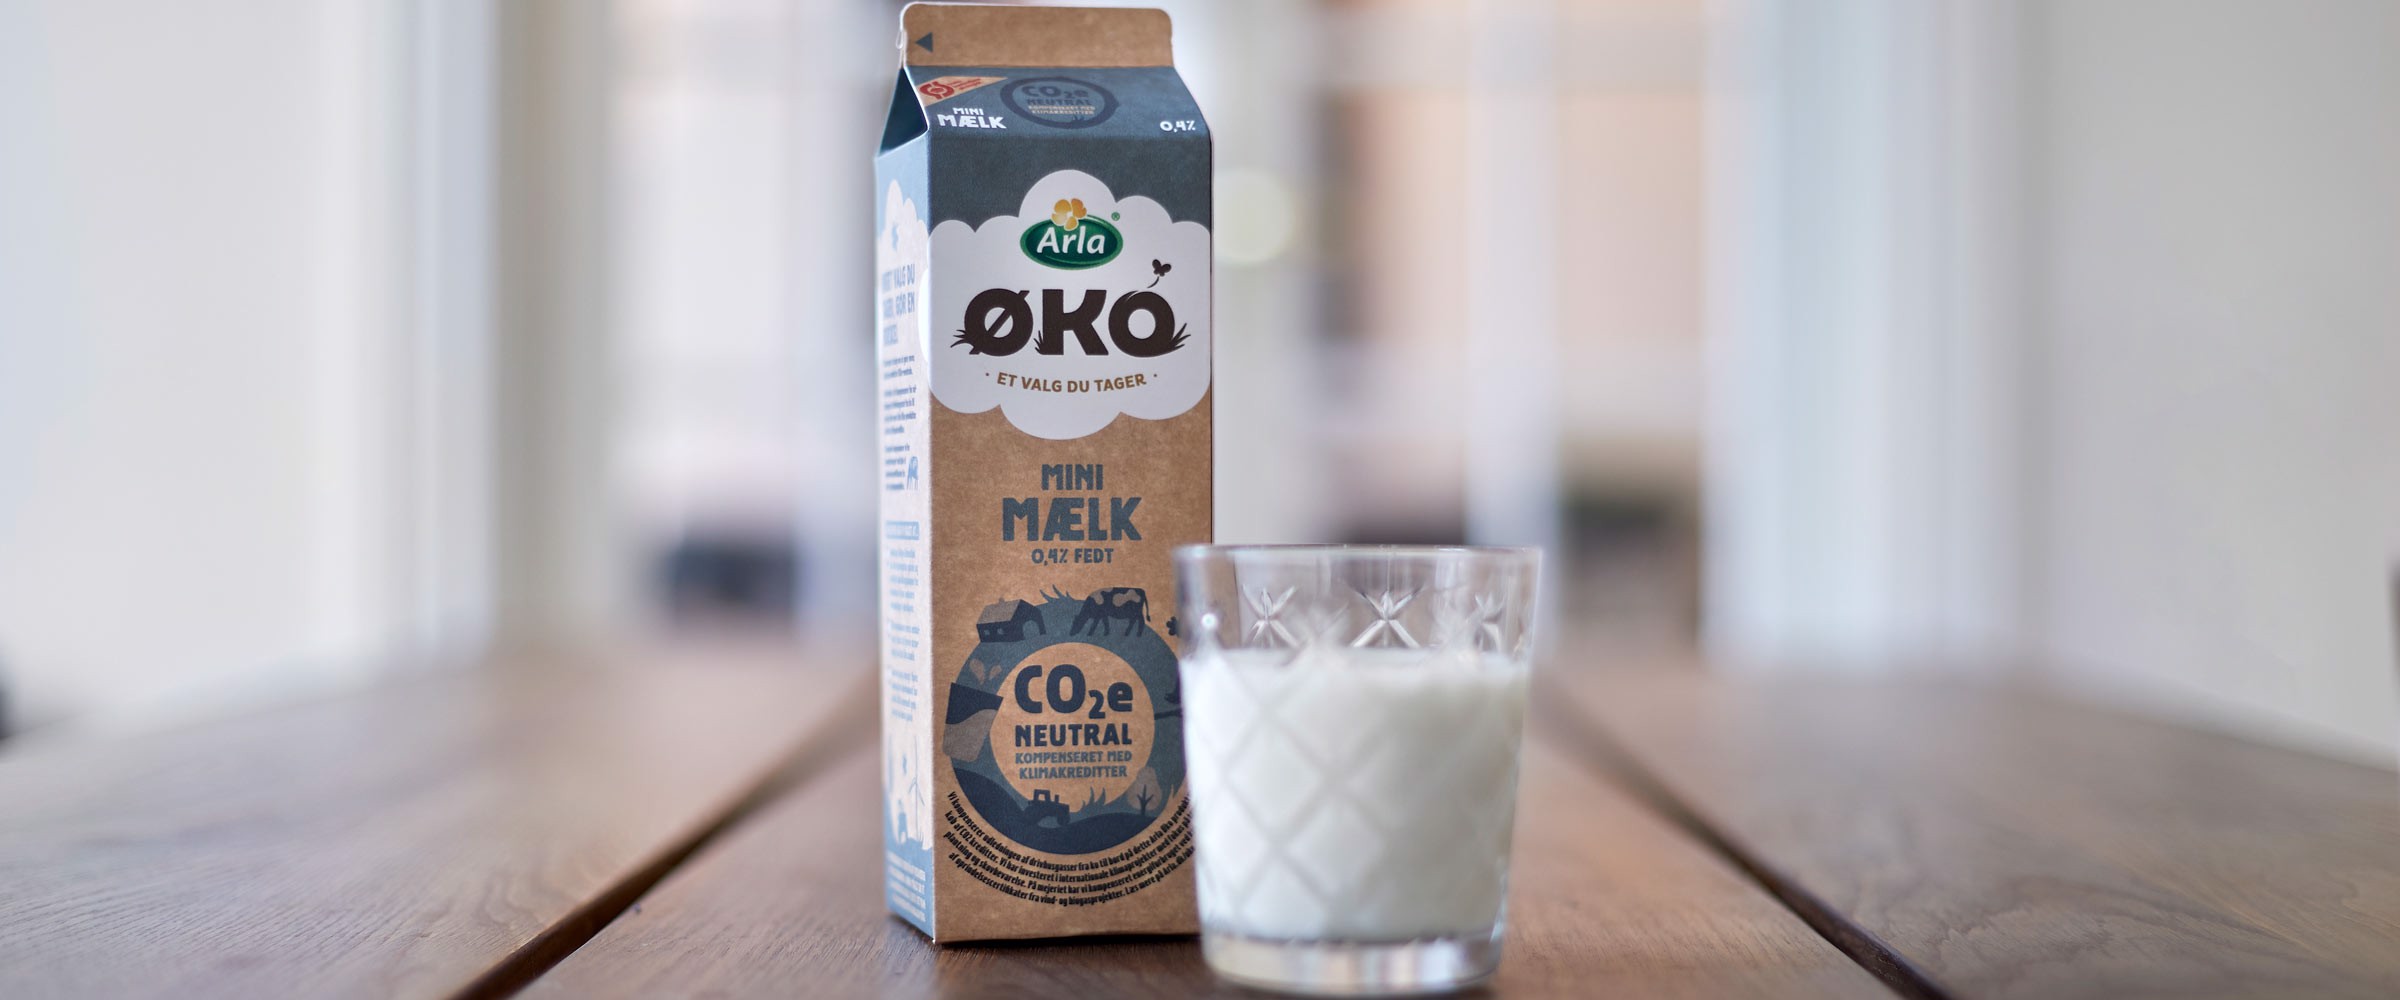 Kan mælk være co2 neutral?